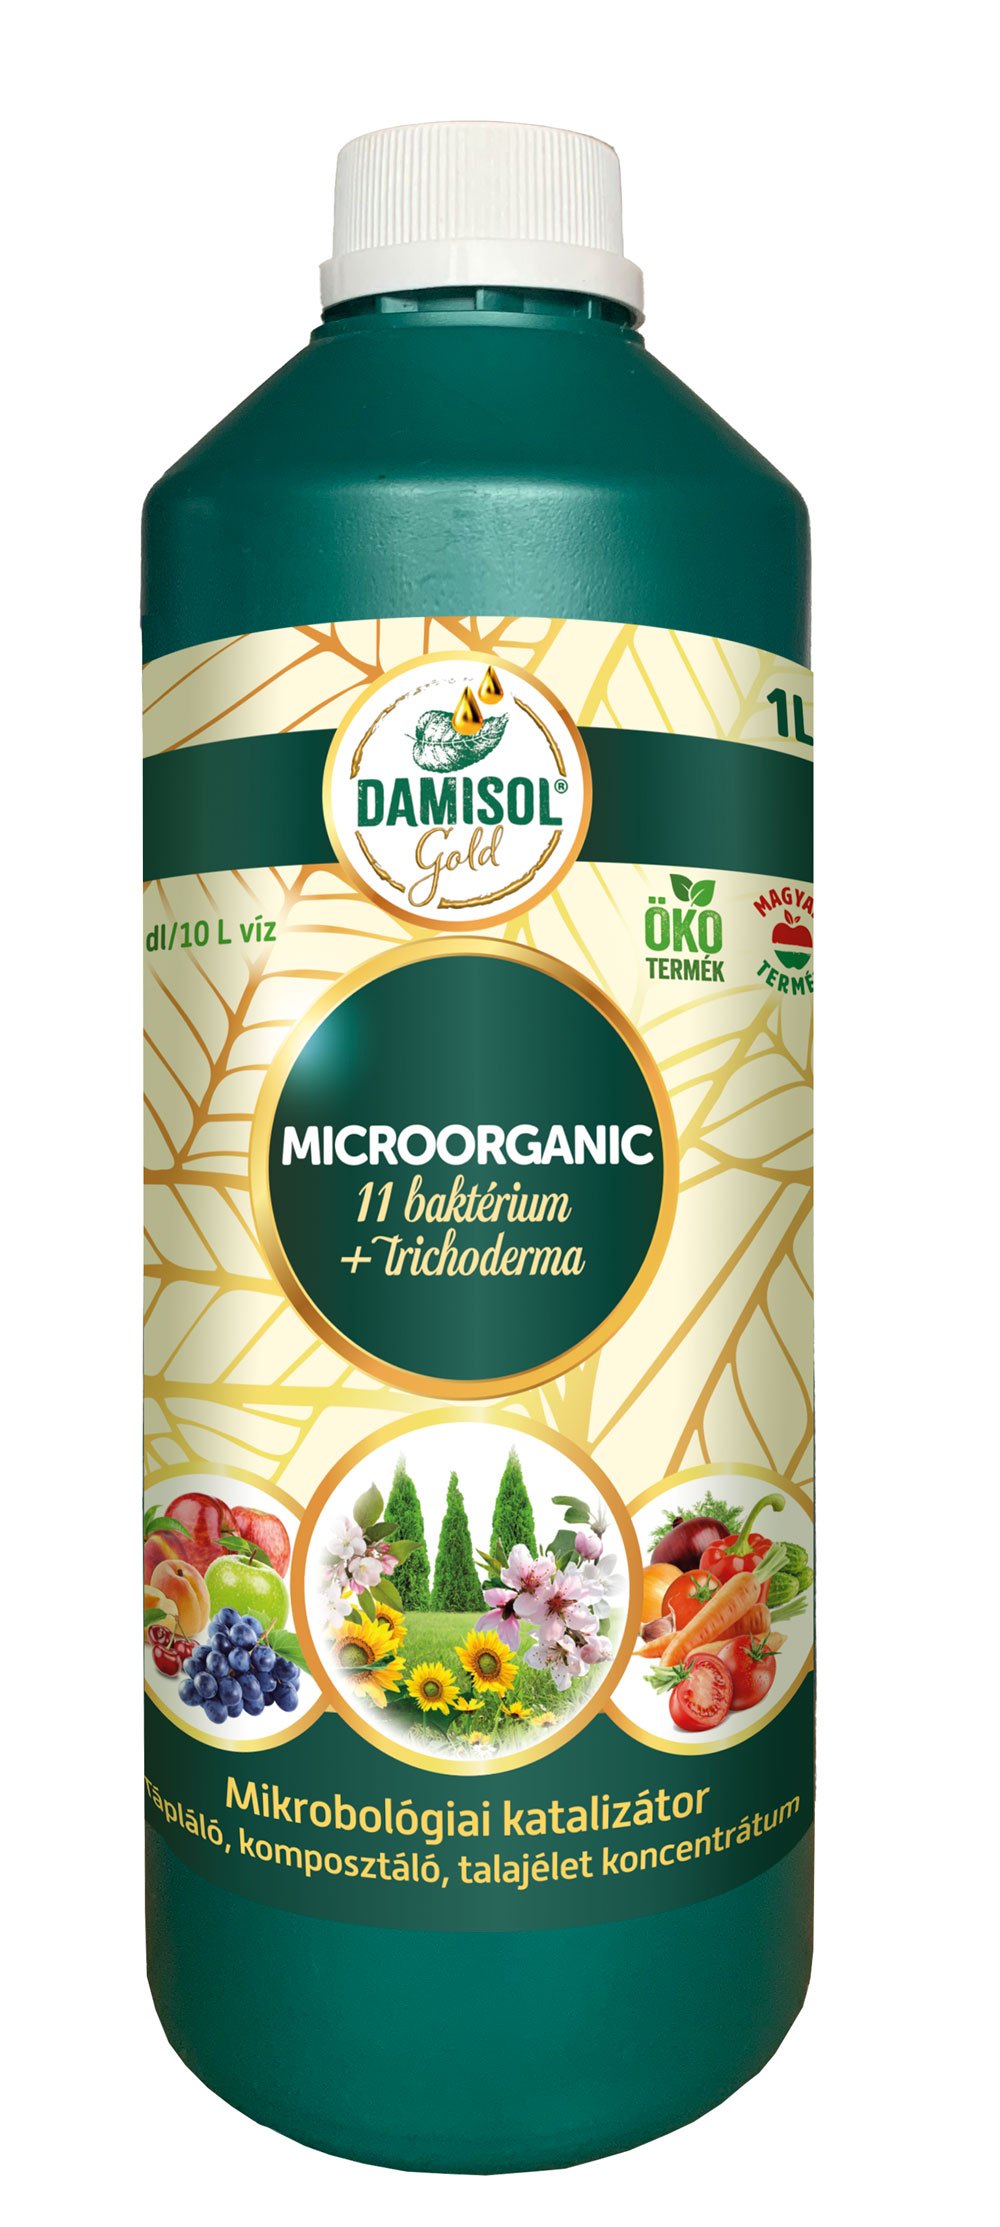 Damisol Gold Microorganic Soil Life 1 l